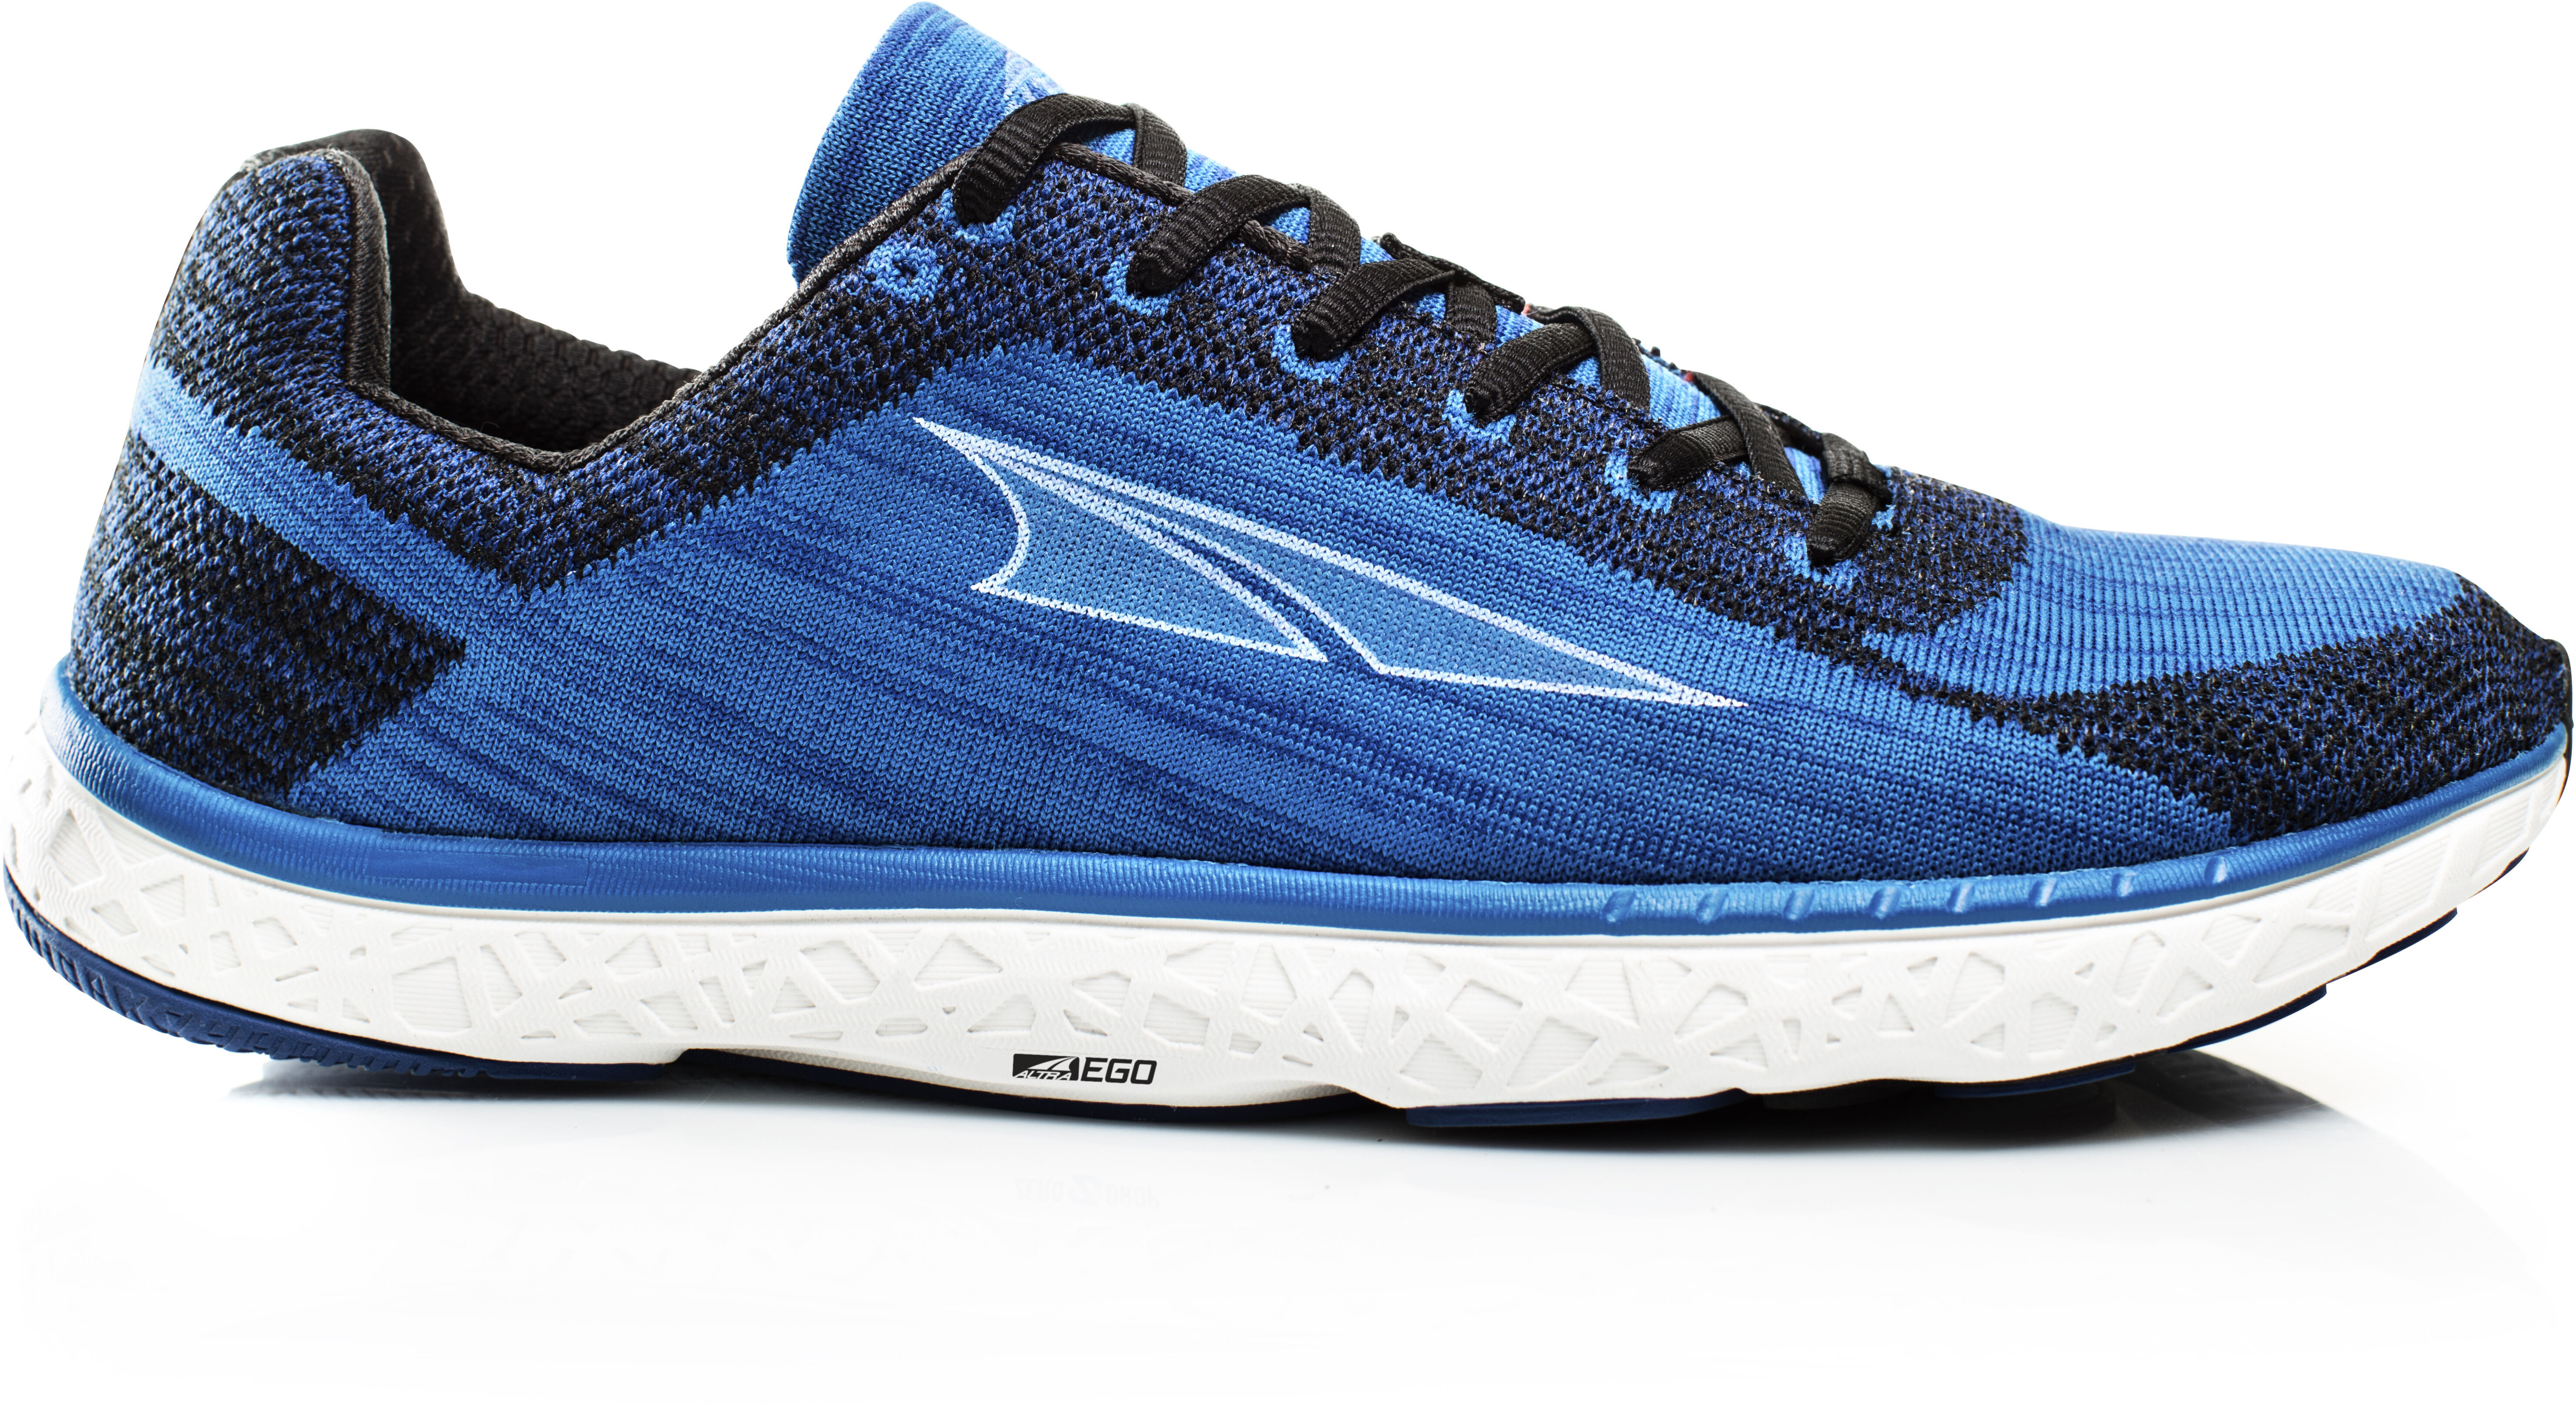 Altra Escalante Road Running Shoes Men blue online kaufen